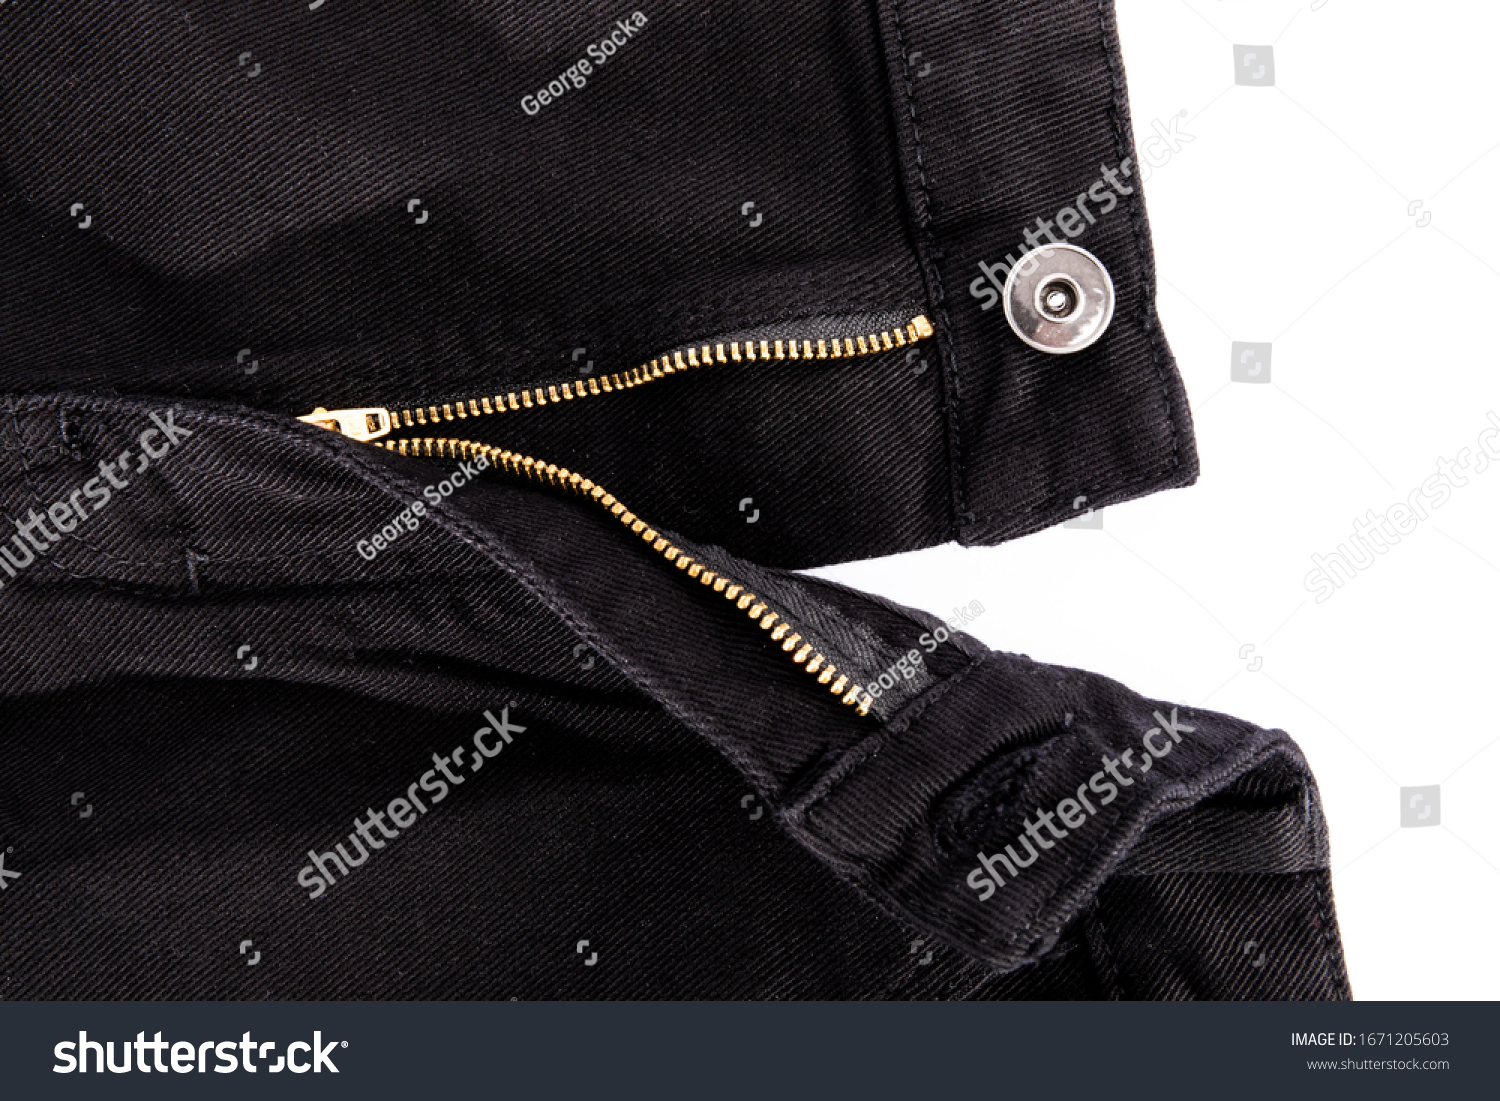 6,279 Open trousers Images, Stock Photos & Vectors | Shutterstock